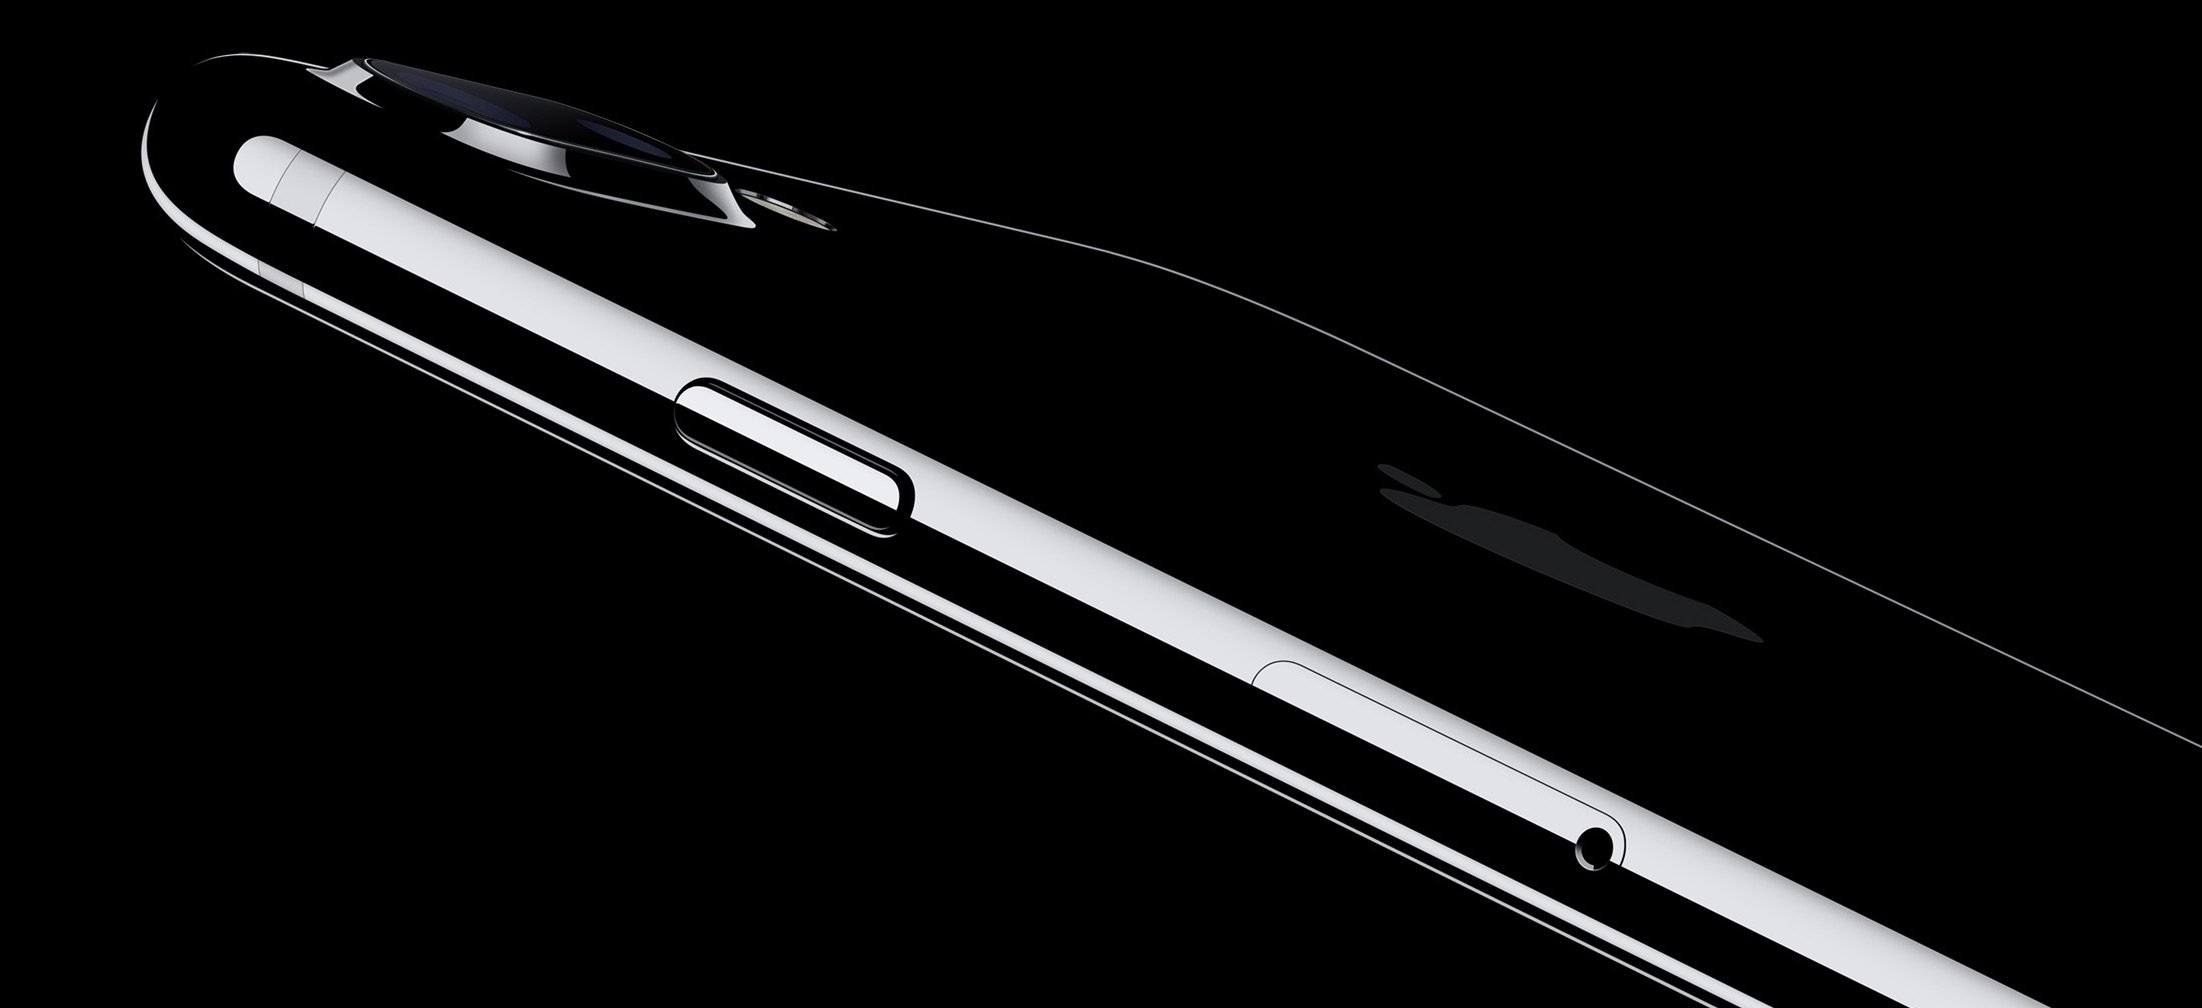 Apple iPhone 7 & iPhone 7 Plus: Akkus mit deutlich mehr Kapazität als iPhone 6s (Plus) 1